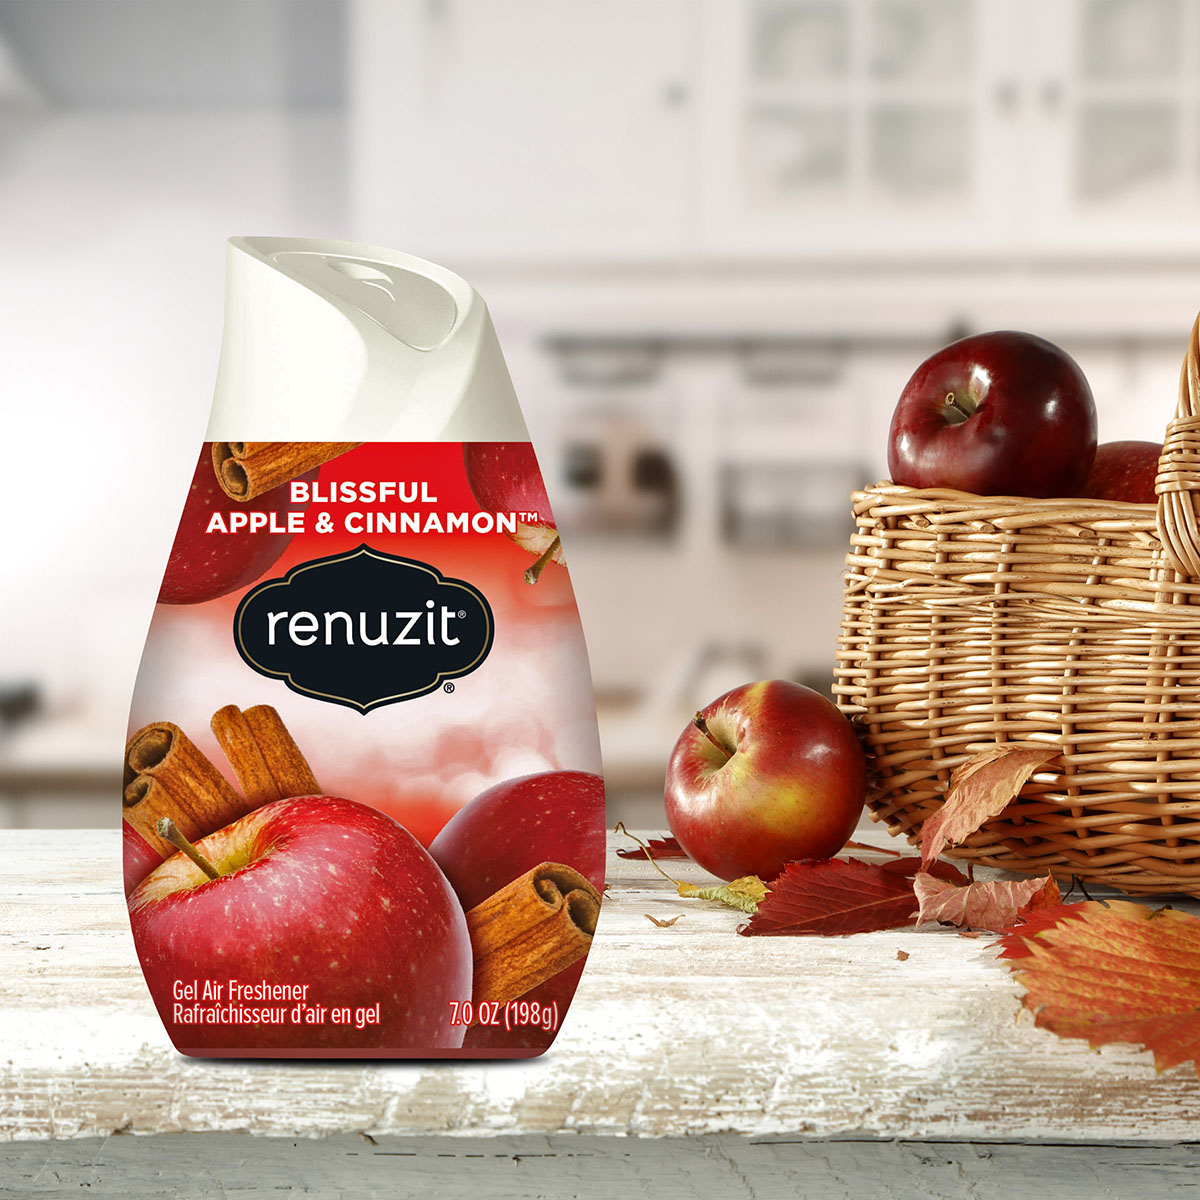 How To Use Renuzit Air Freshener